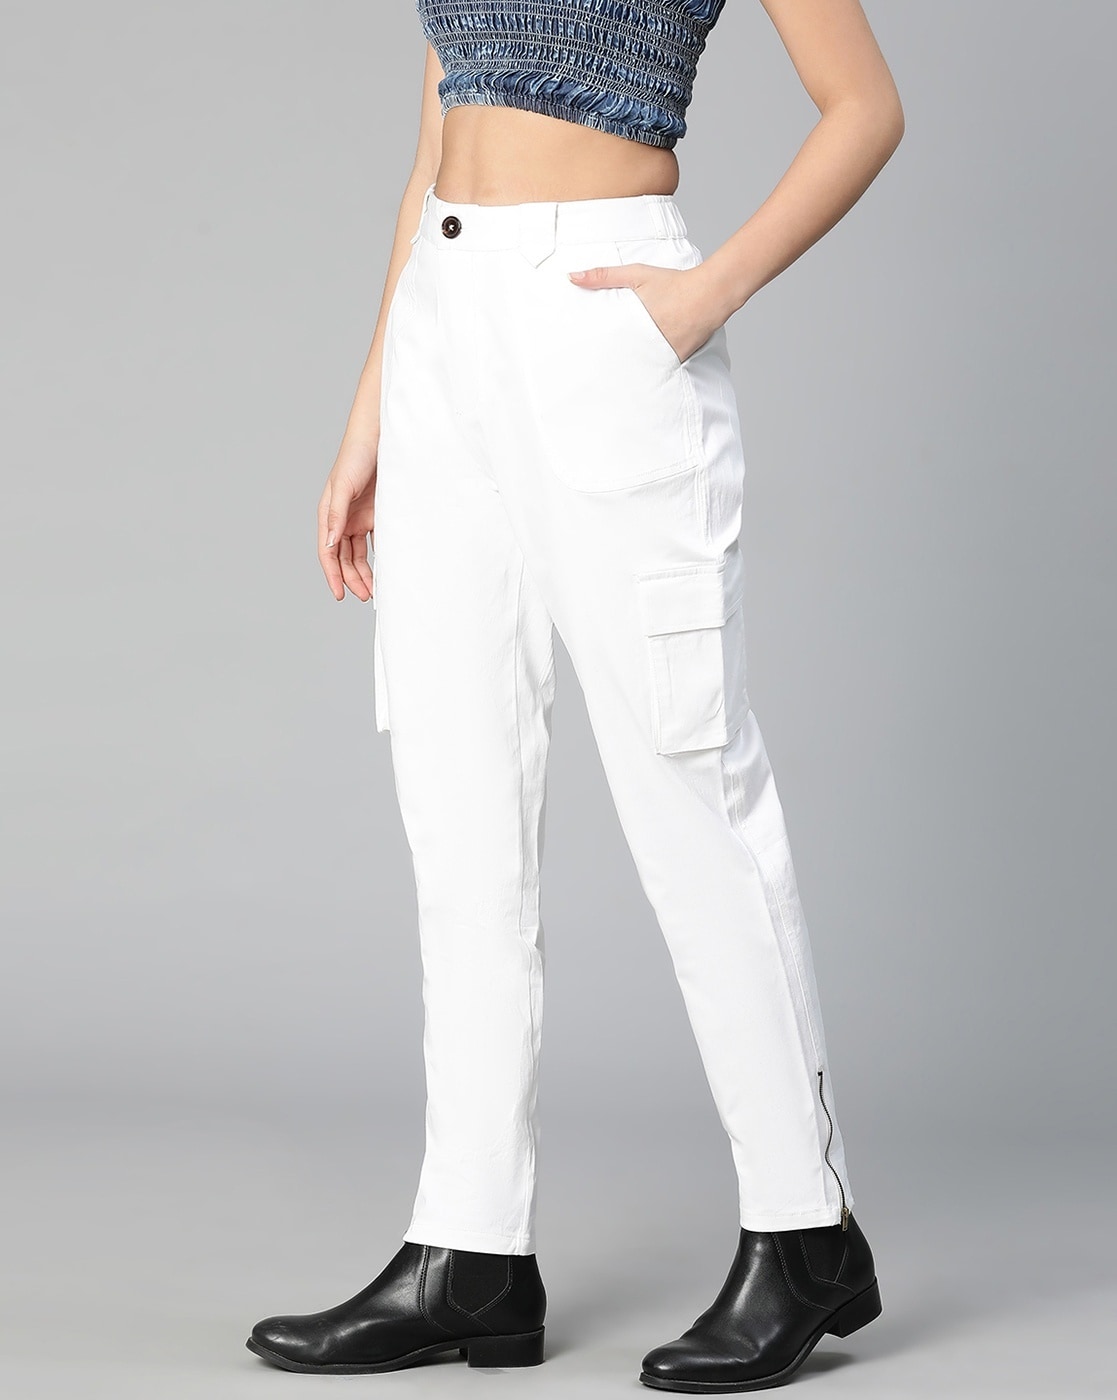 Black and white, cargo pants, women, wide-leg casual | eBay